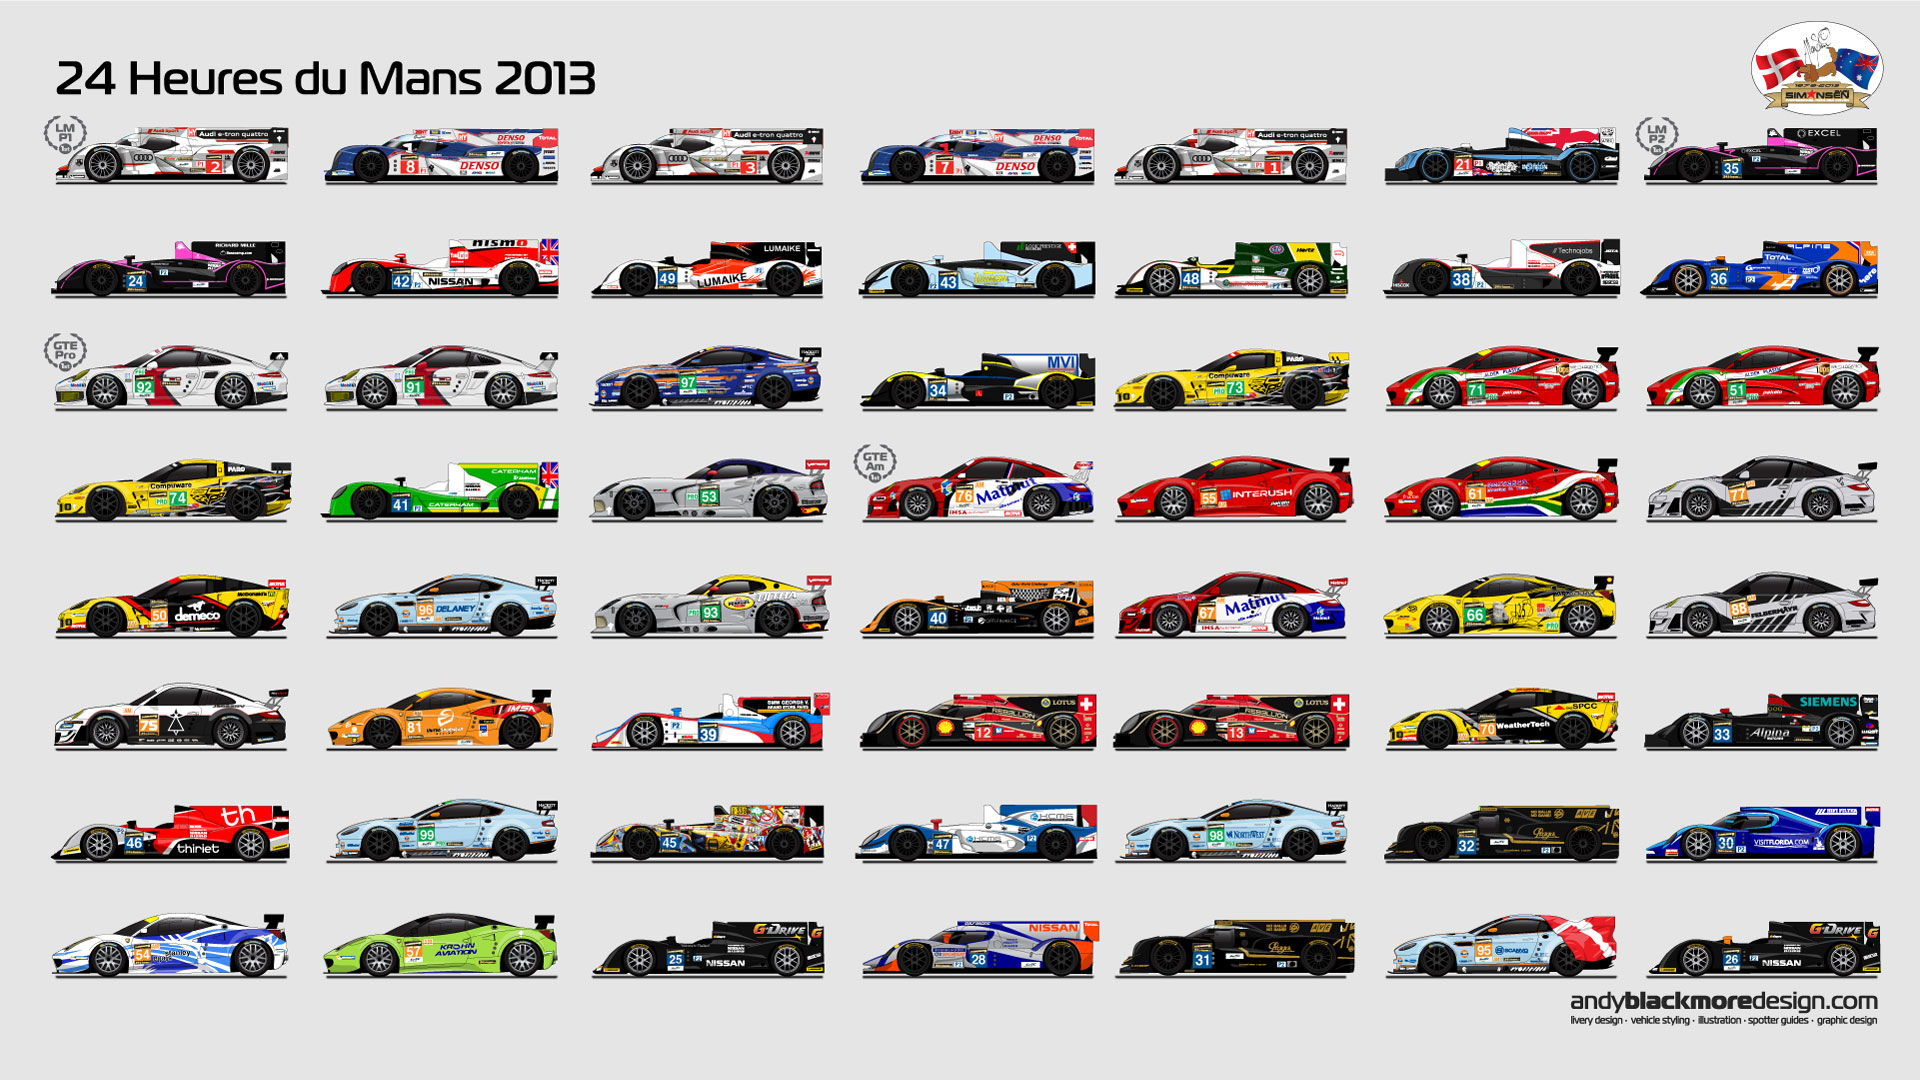 You Can Also This Le Mans Desktop Wallpaper As A Small Thank